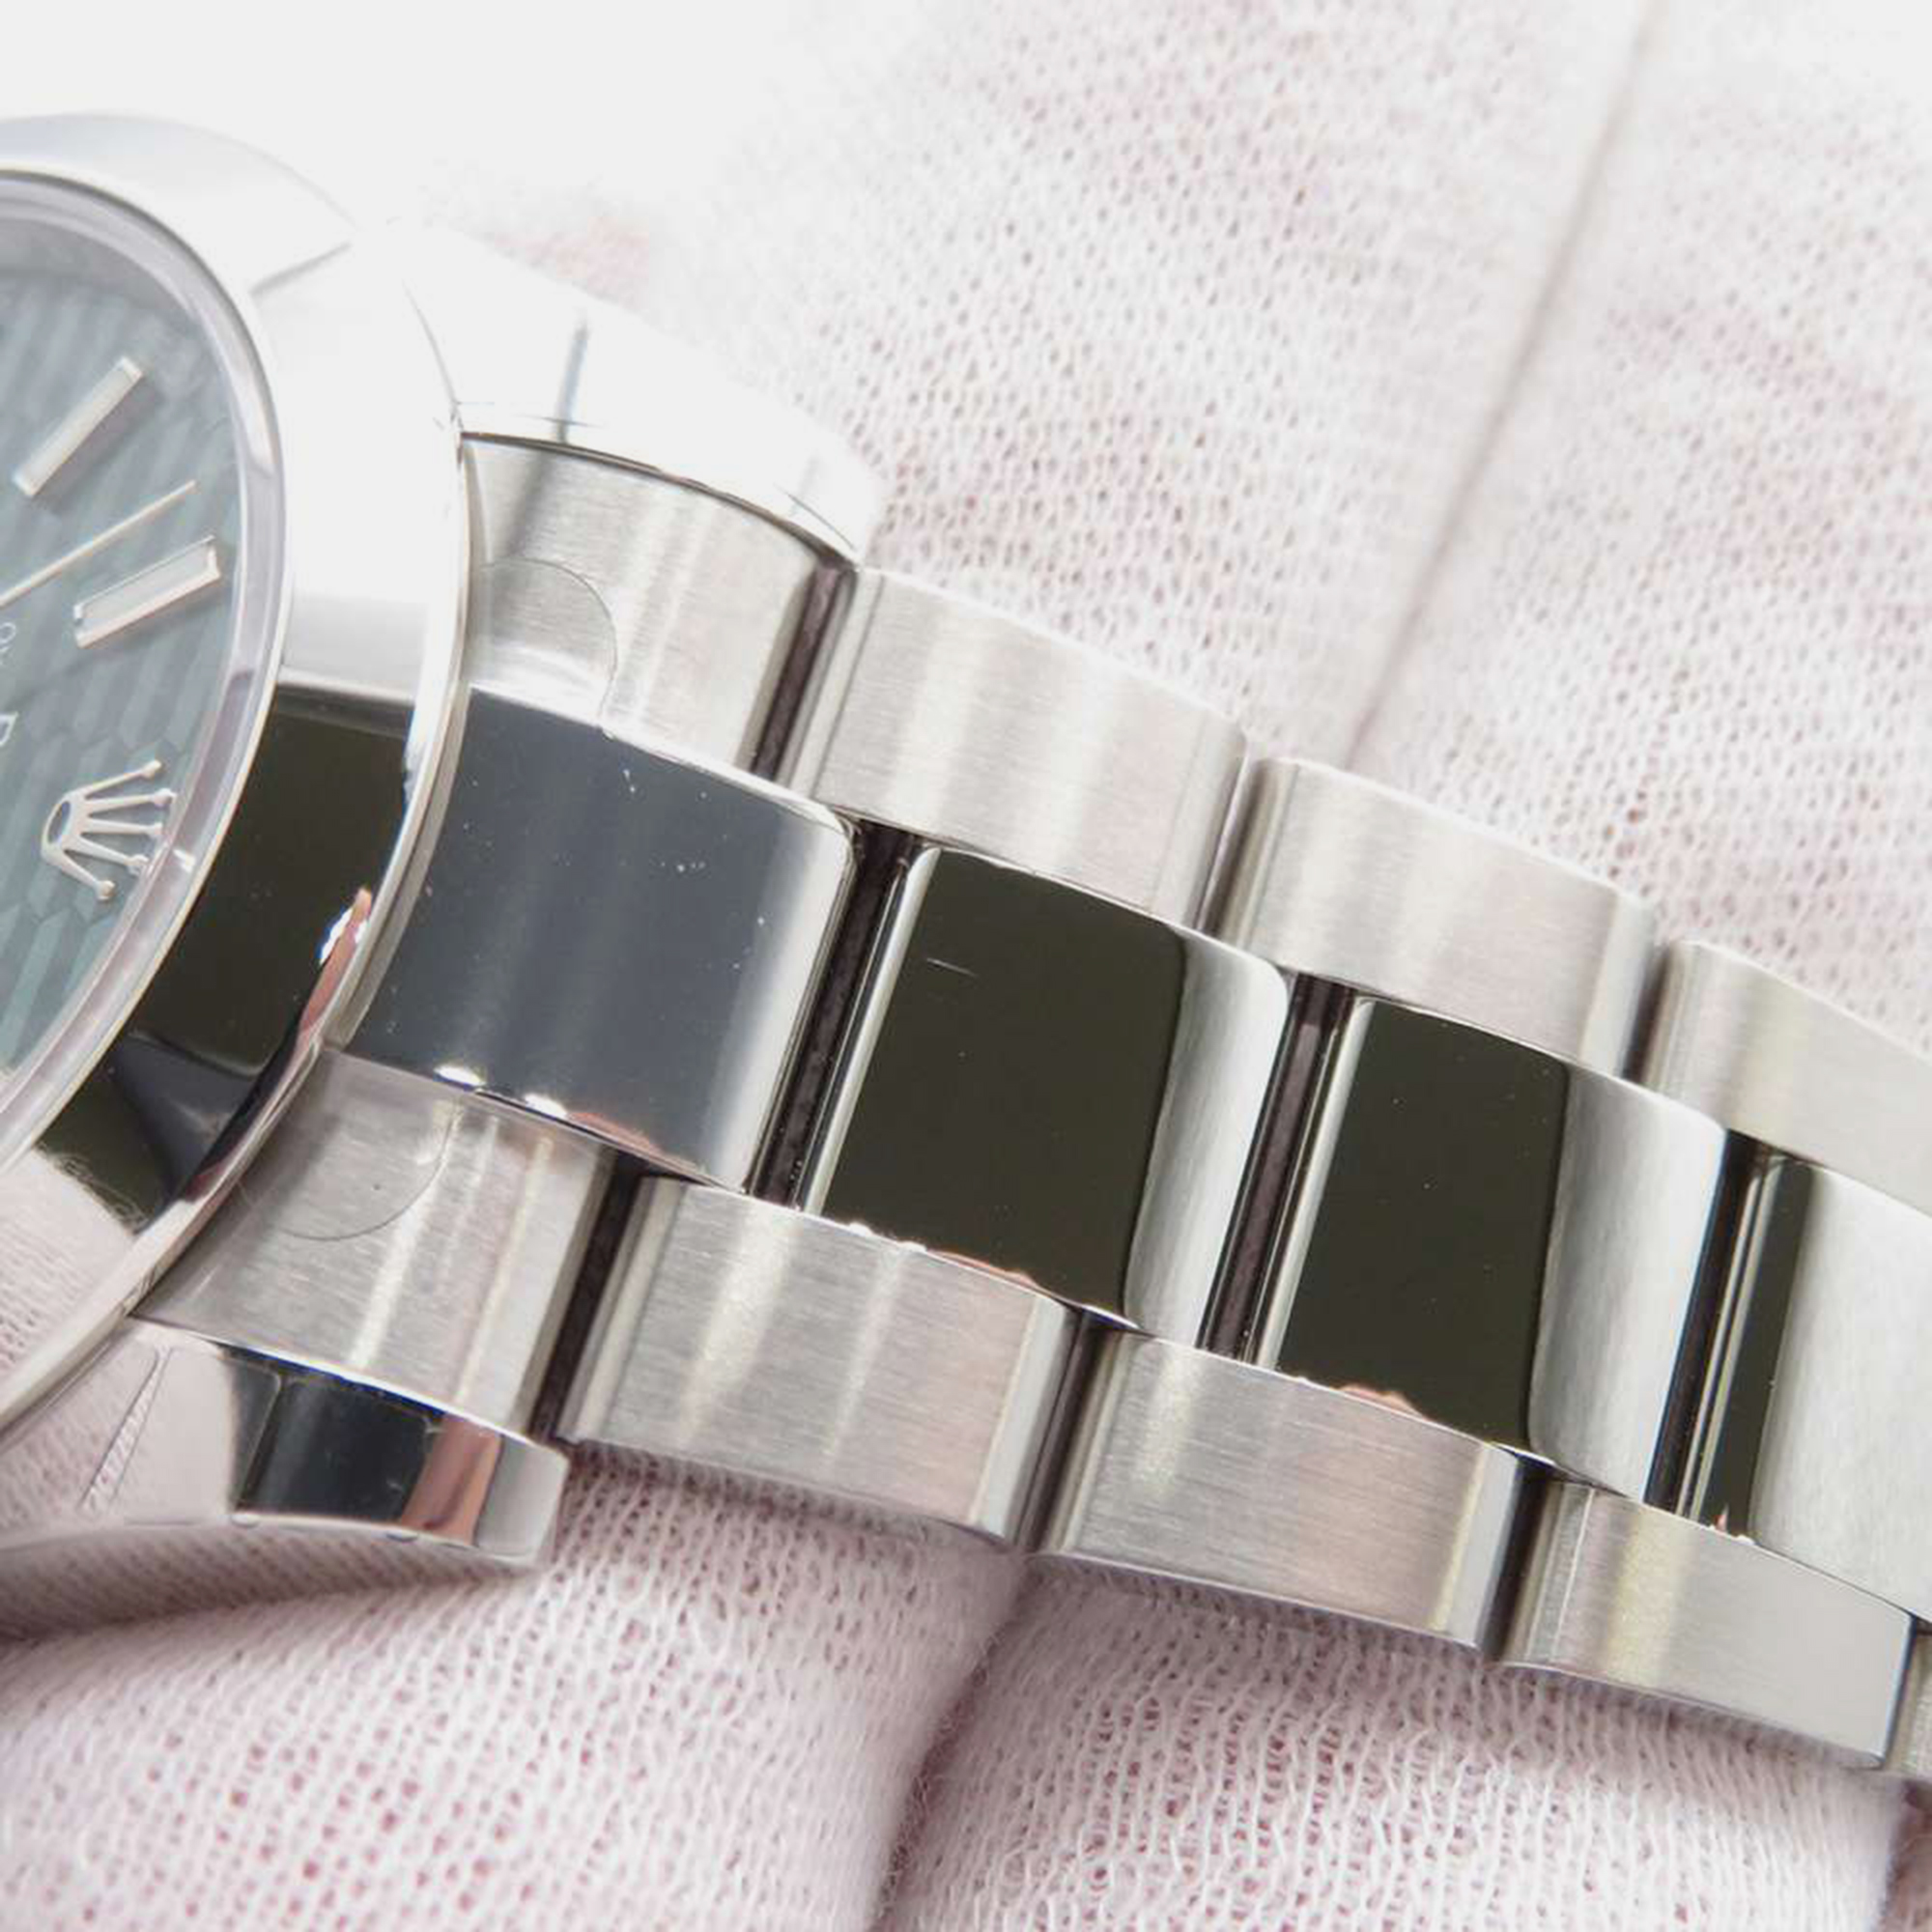 Rolex Green Stainless Steel Datejust 126300 Automatic Men's Wristwatch 41 Mm